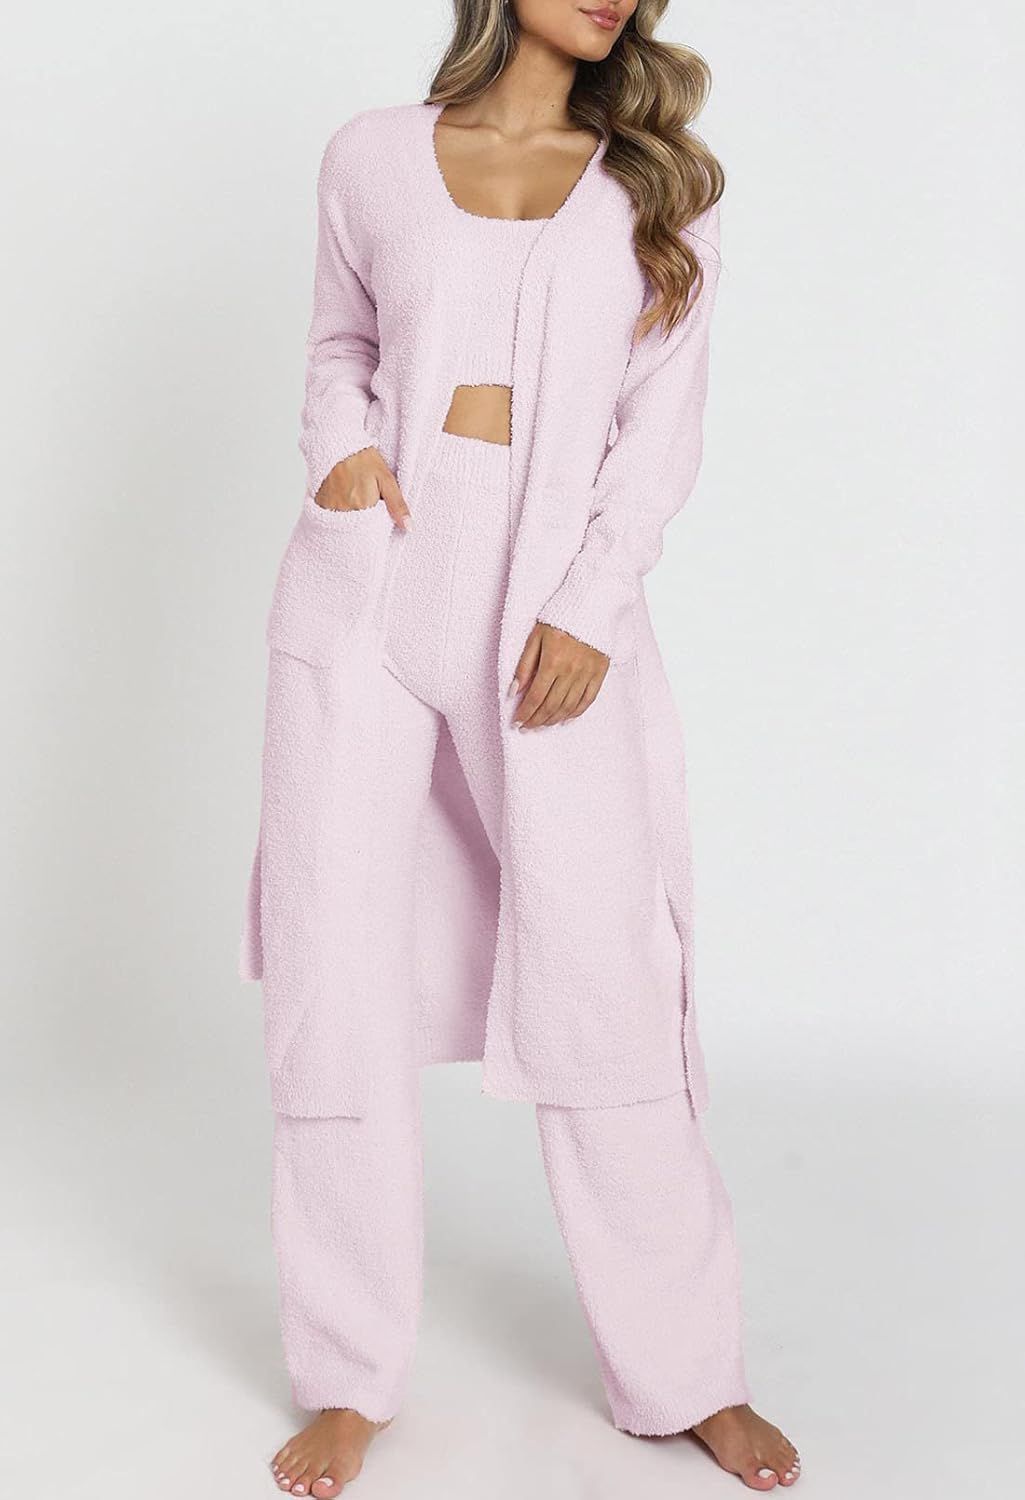 Fixmatti Women's Fuzzy 3 Piece Sweatsuit Open Front Cardigan Crop Tank Tops Wide Legs Pants Loung... | Amazon (US)